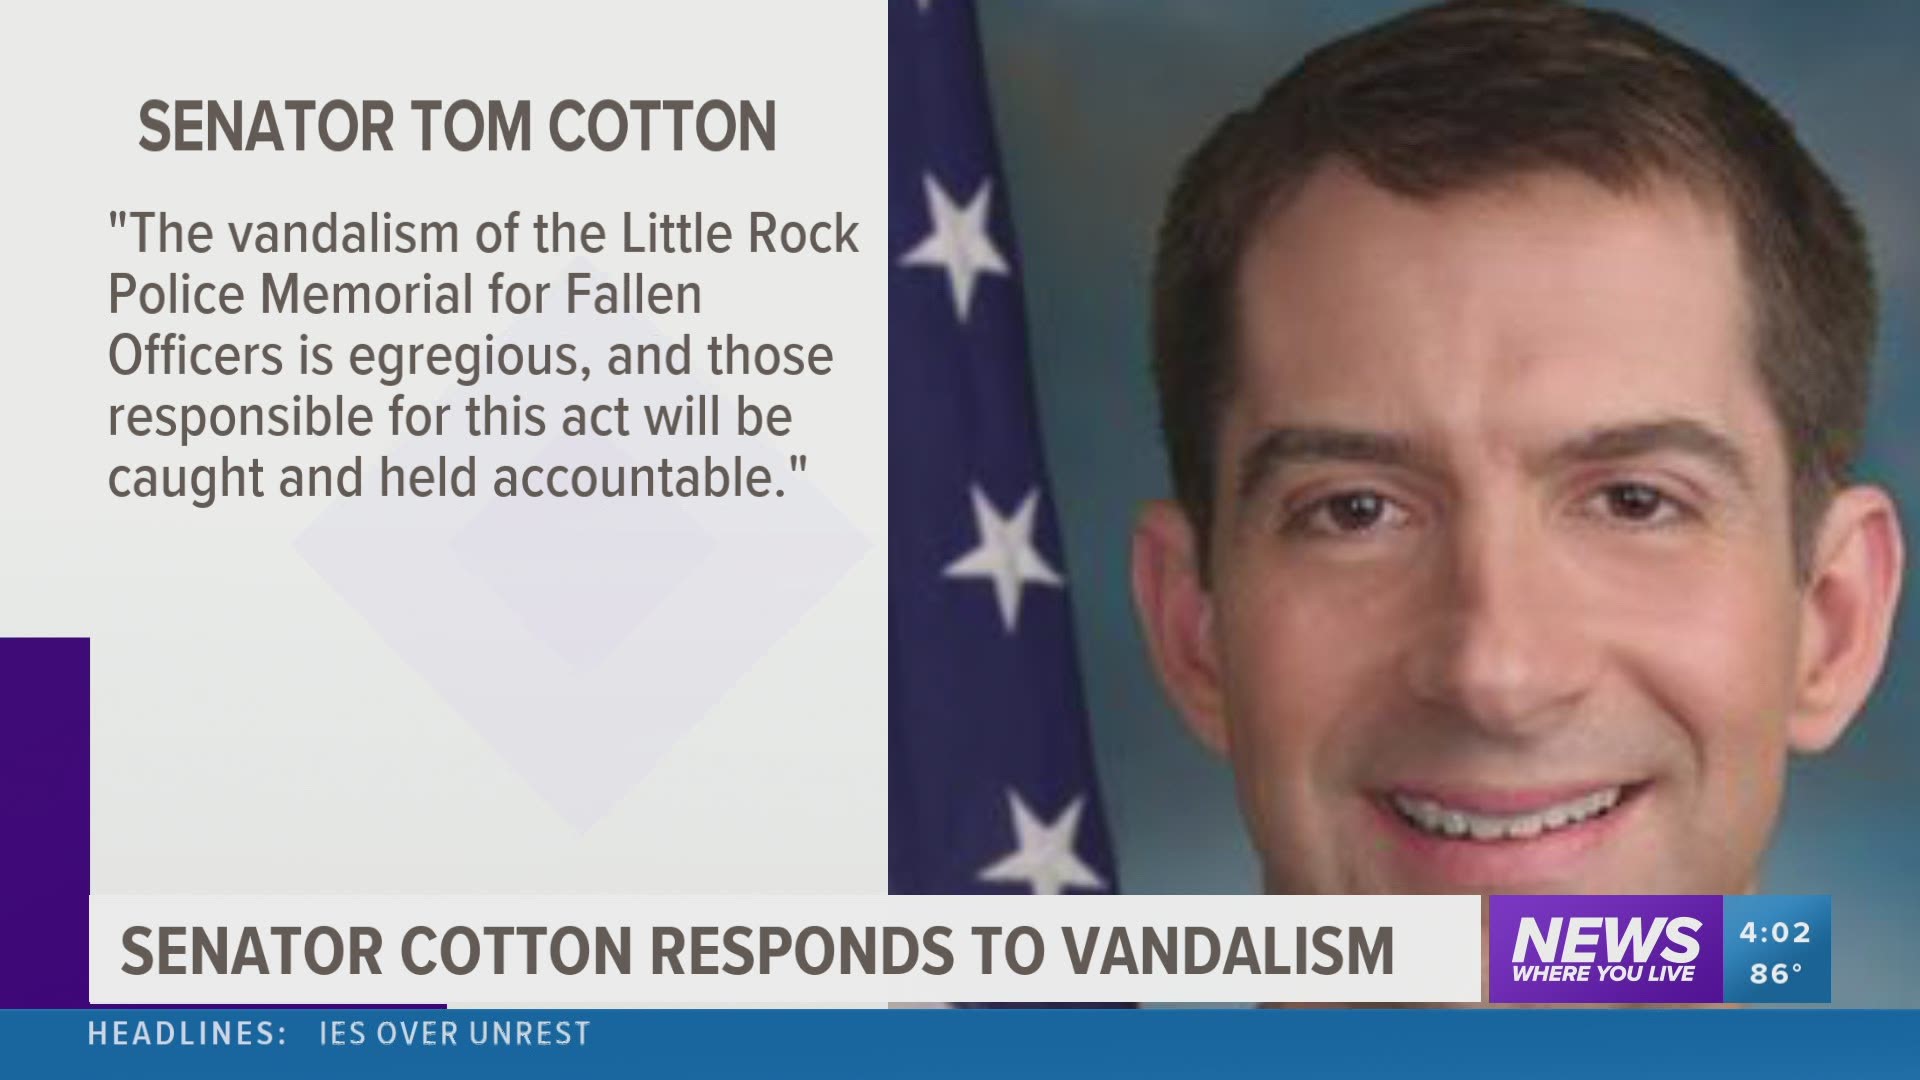 Senator cotton responds to vandalism